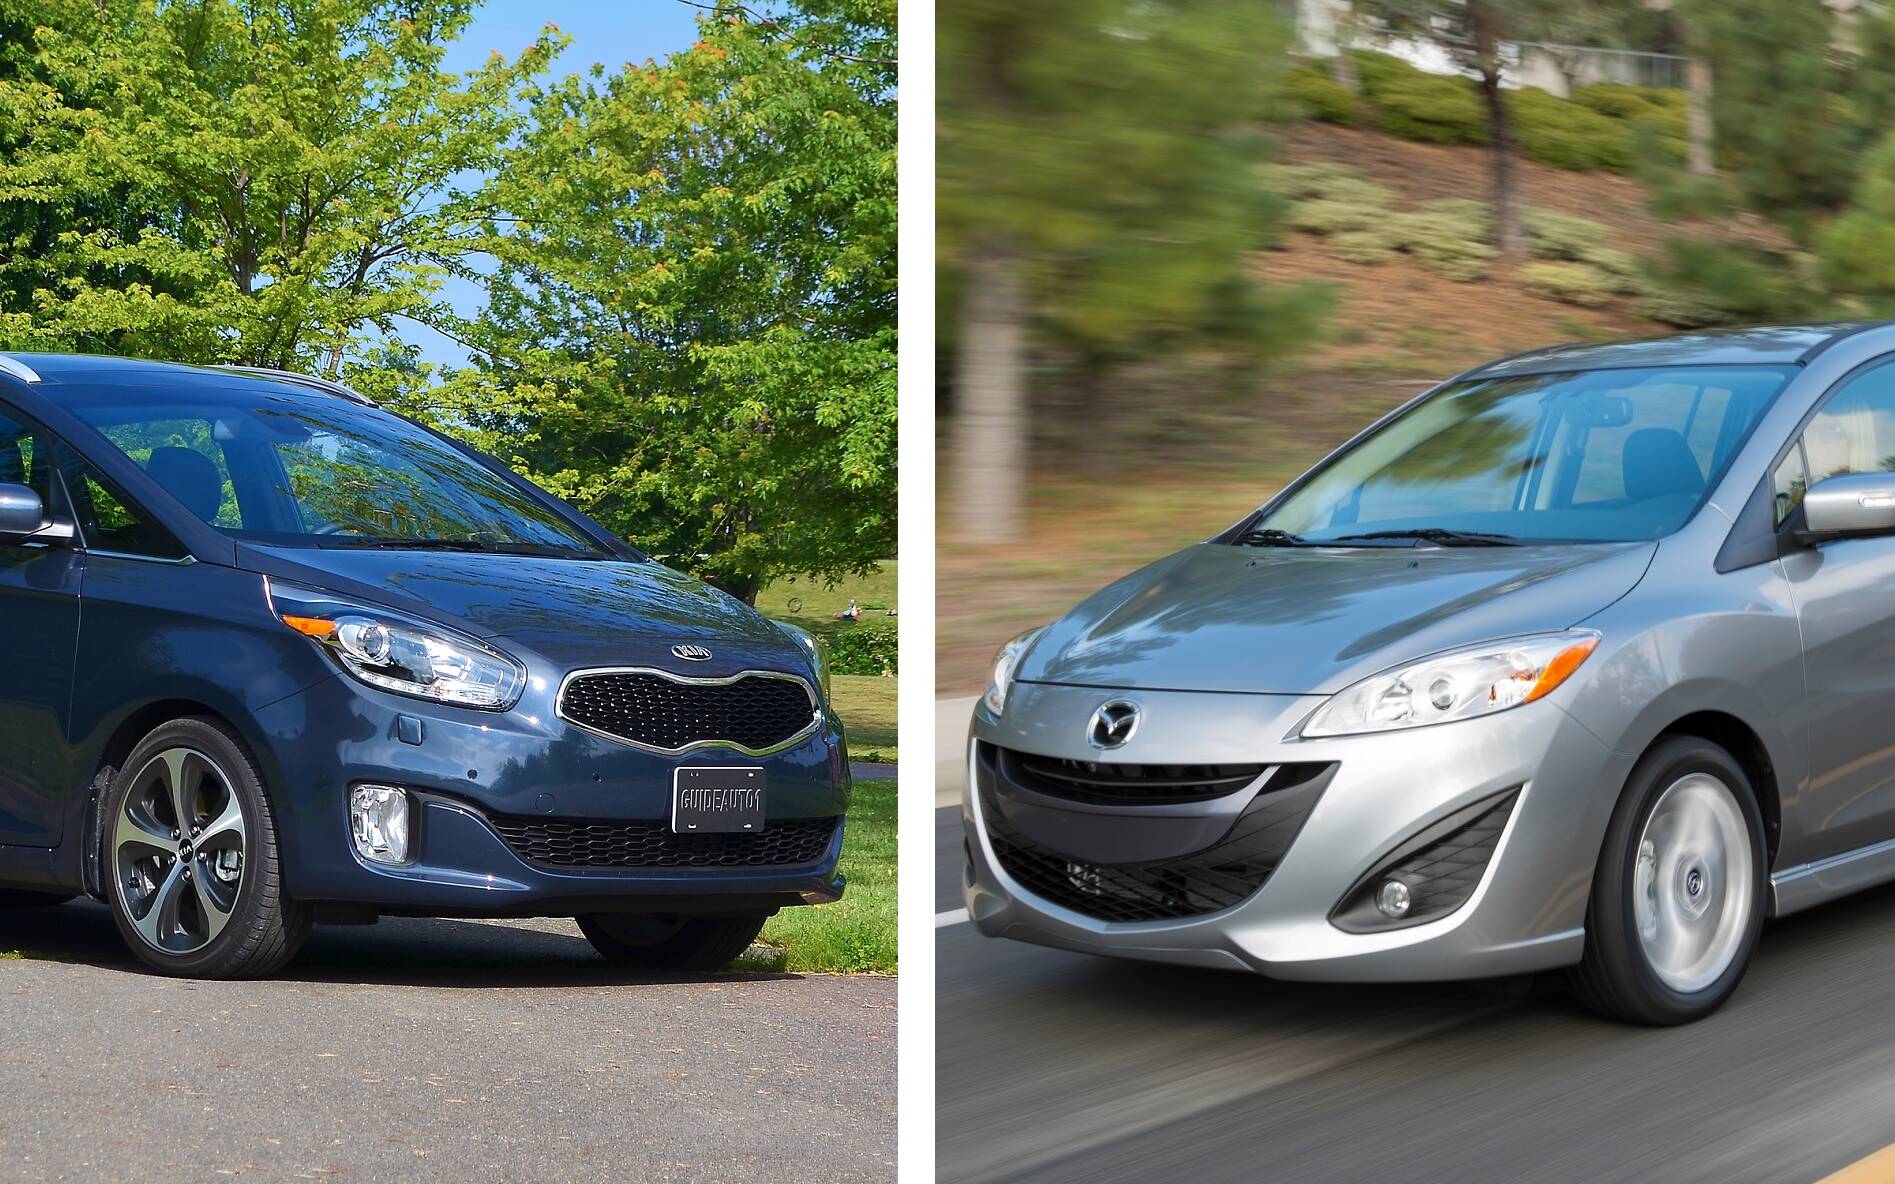 Kia Rondo Or Mazda5: Which One Should You Choose?